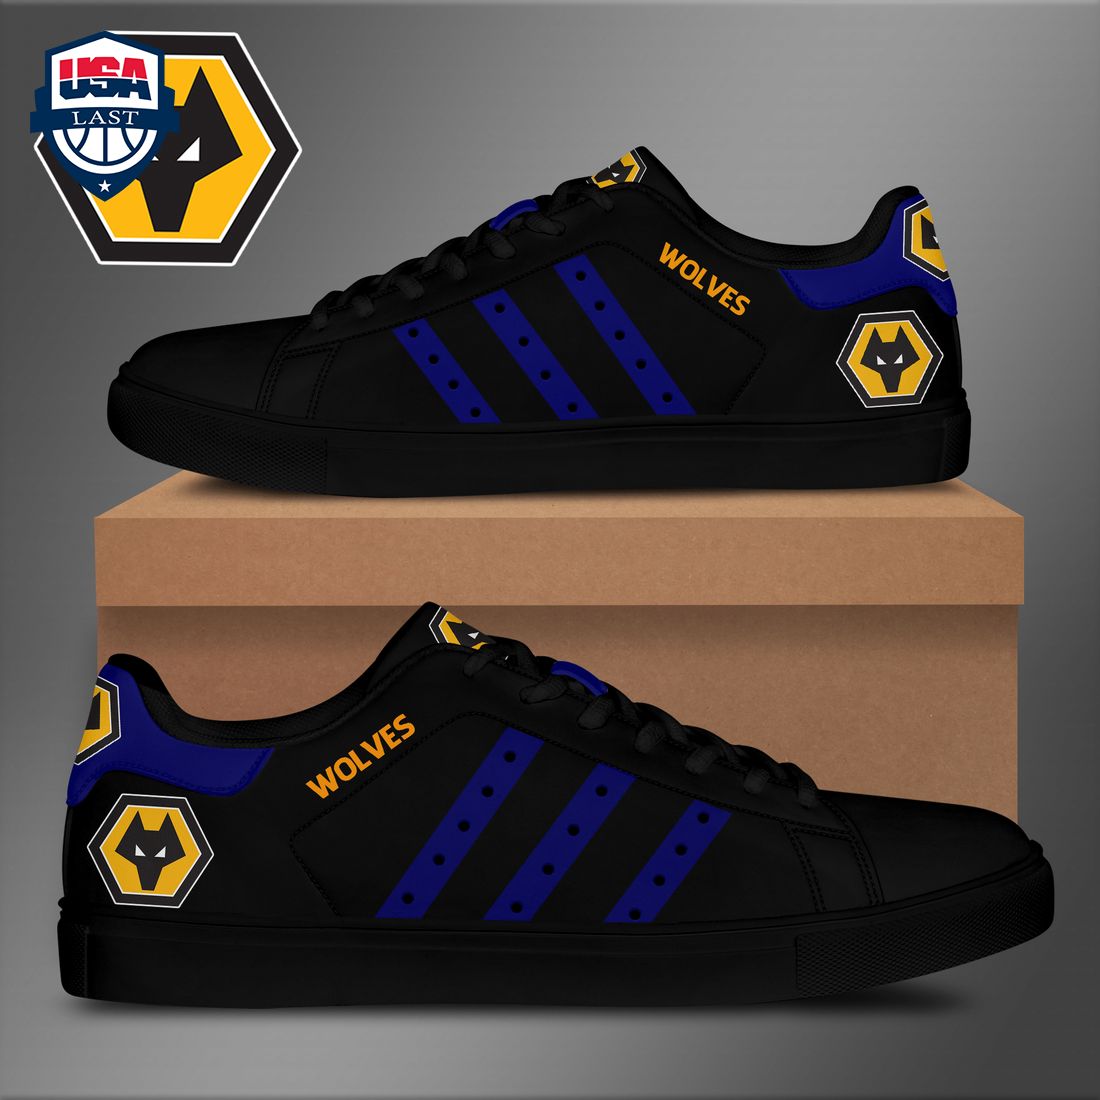 Wolvehampton Wanderers FC Blue Stripes Style 2 Stan Smith Low Top Shoes – Saleoff